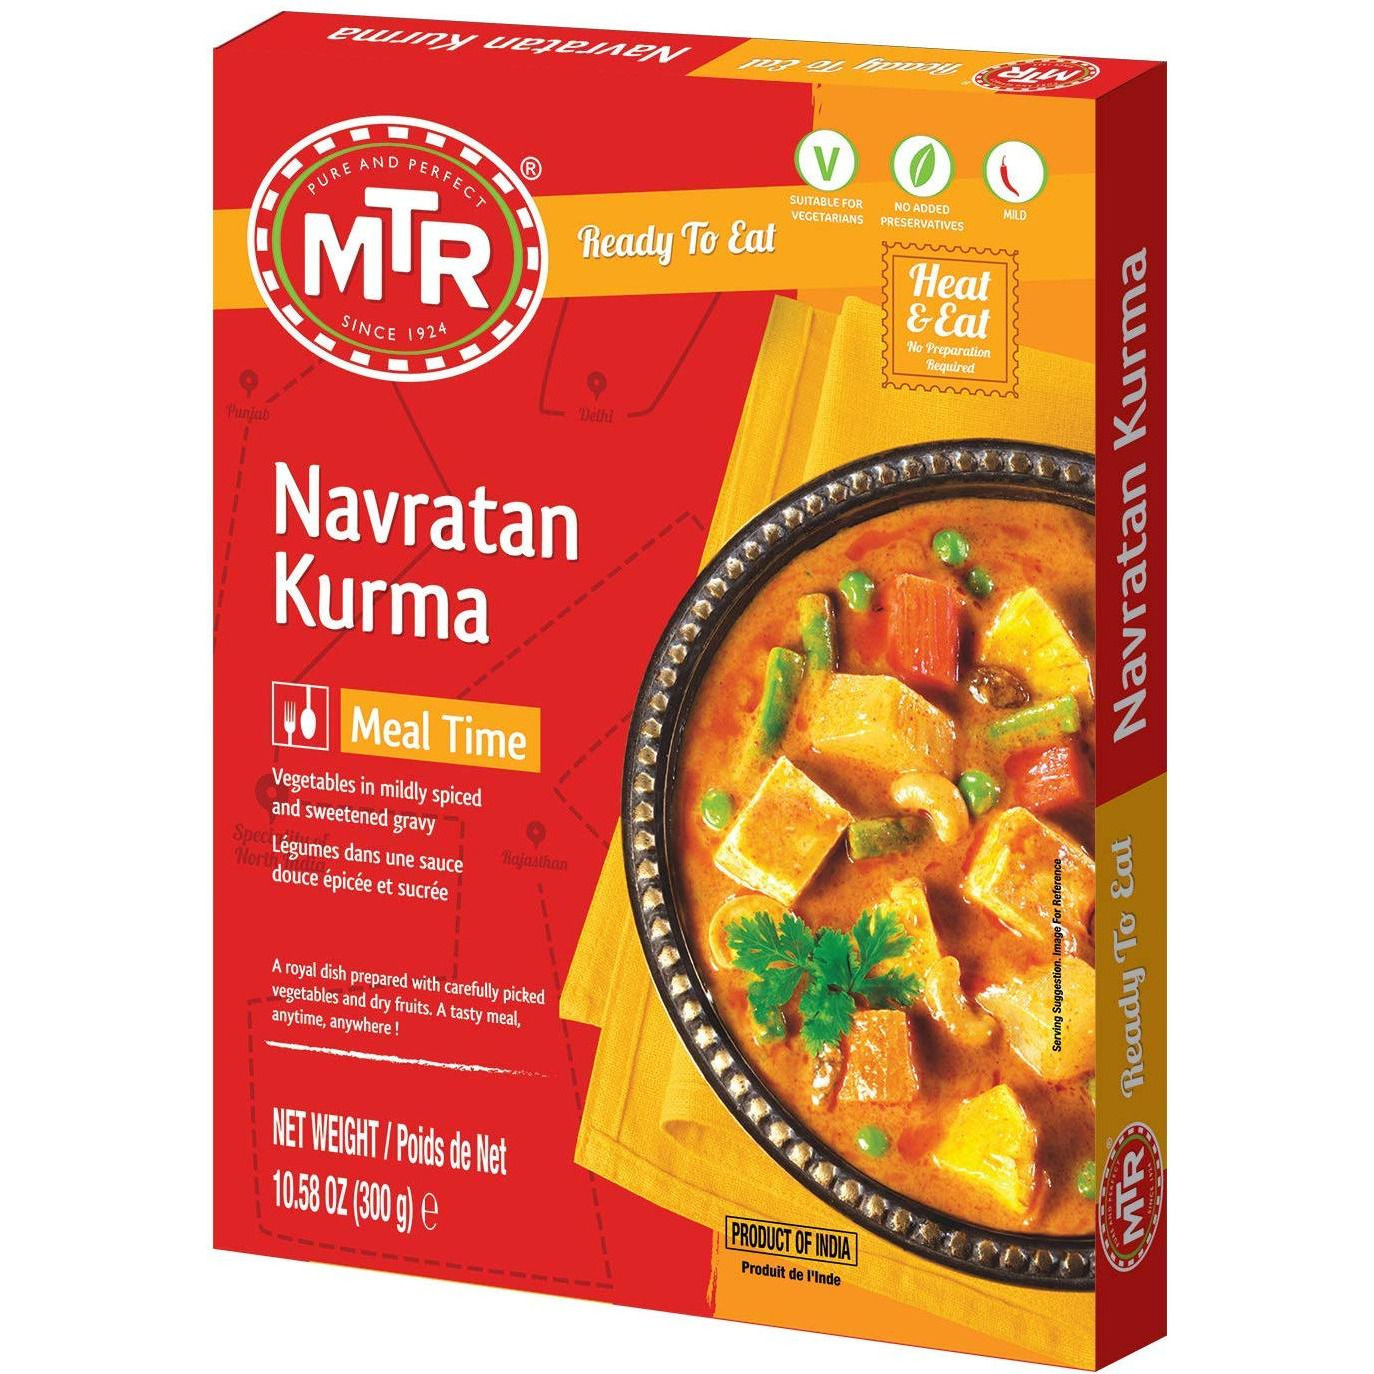 Pack of 5 - Mtr Ready To Eat Navratan Kurma - 300 Gm (10.58 Oz)